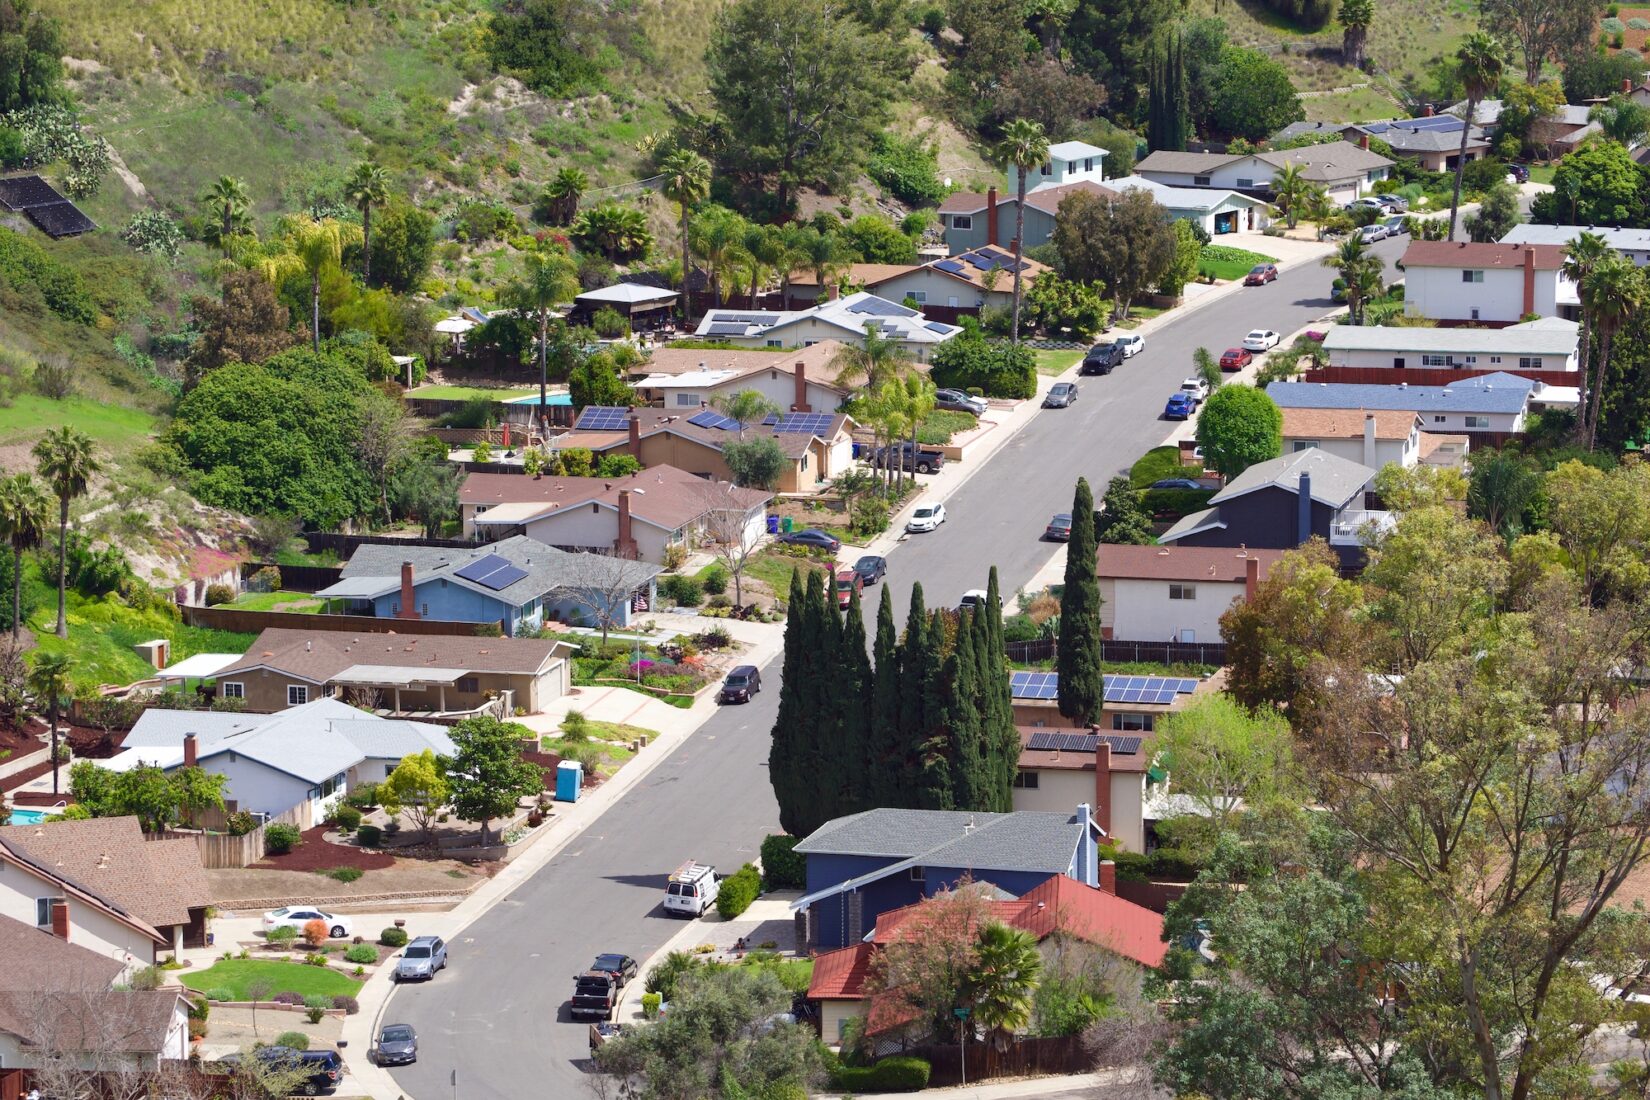 Exterior View of San Diego Neighborhood Homes